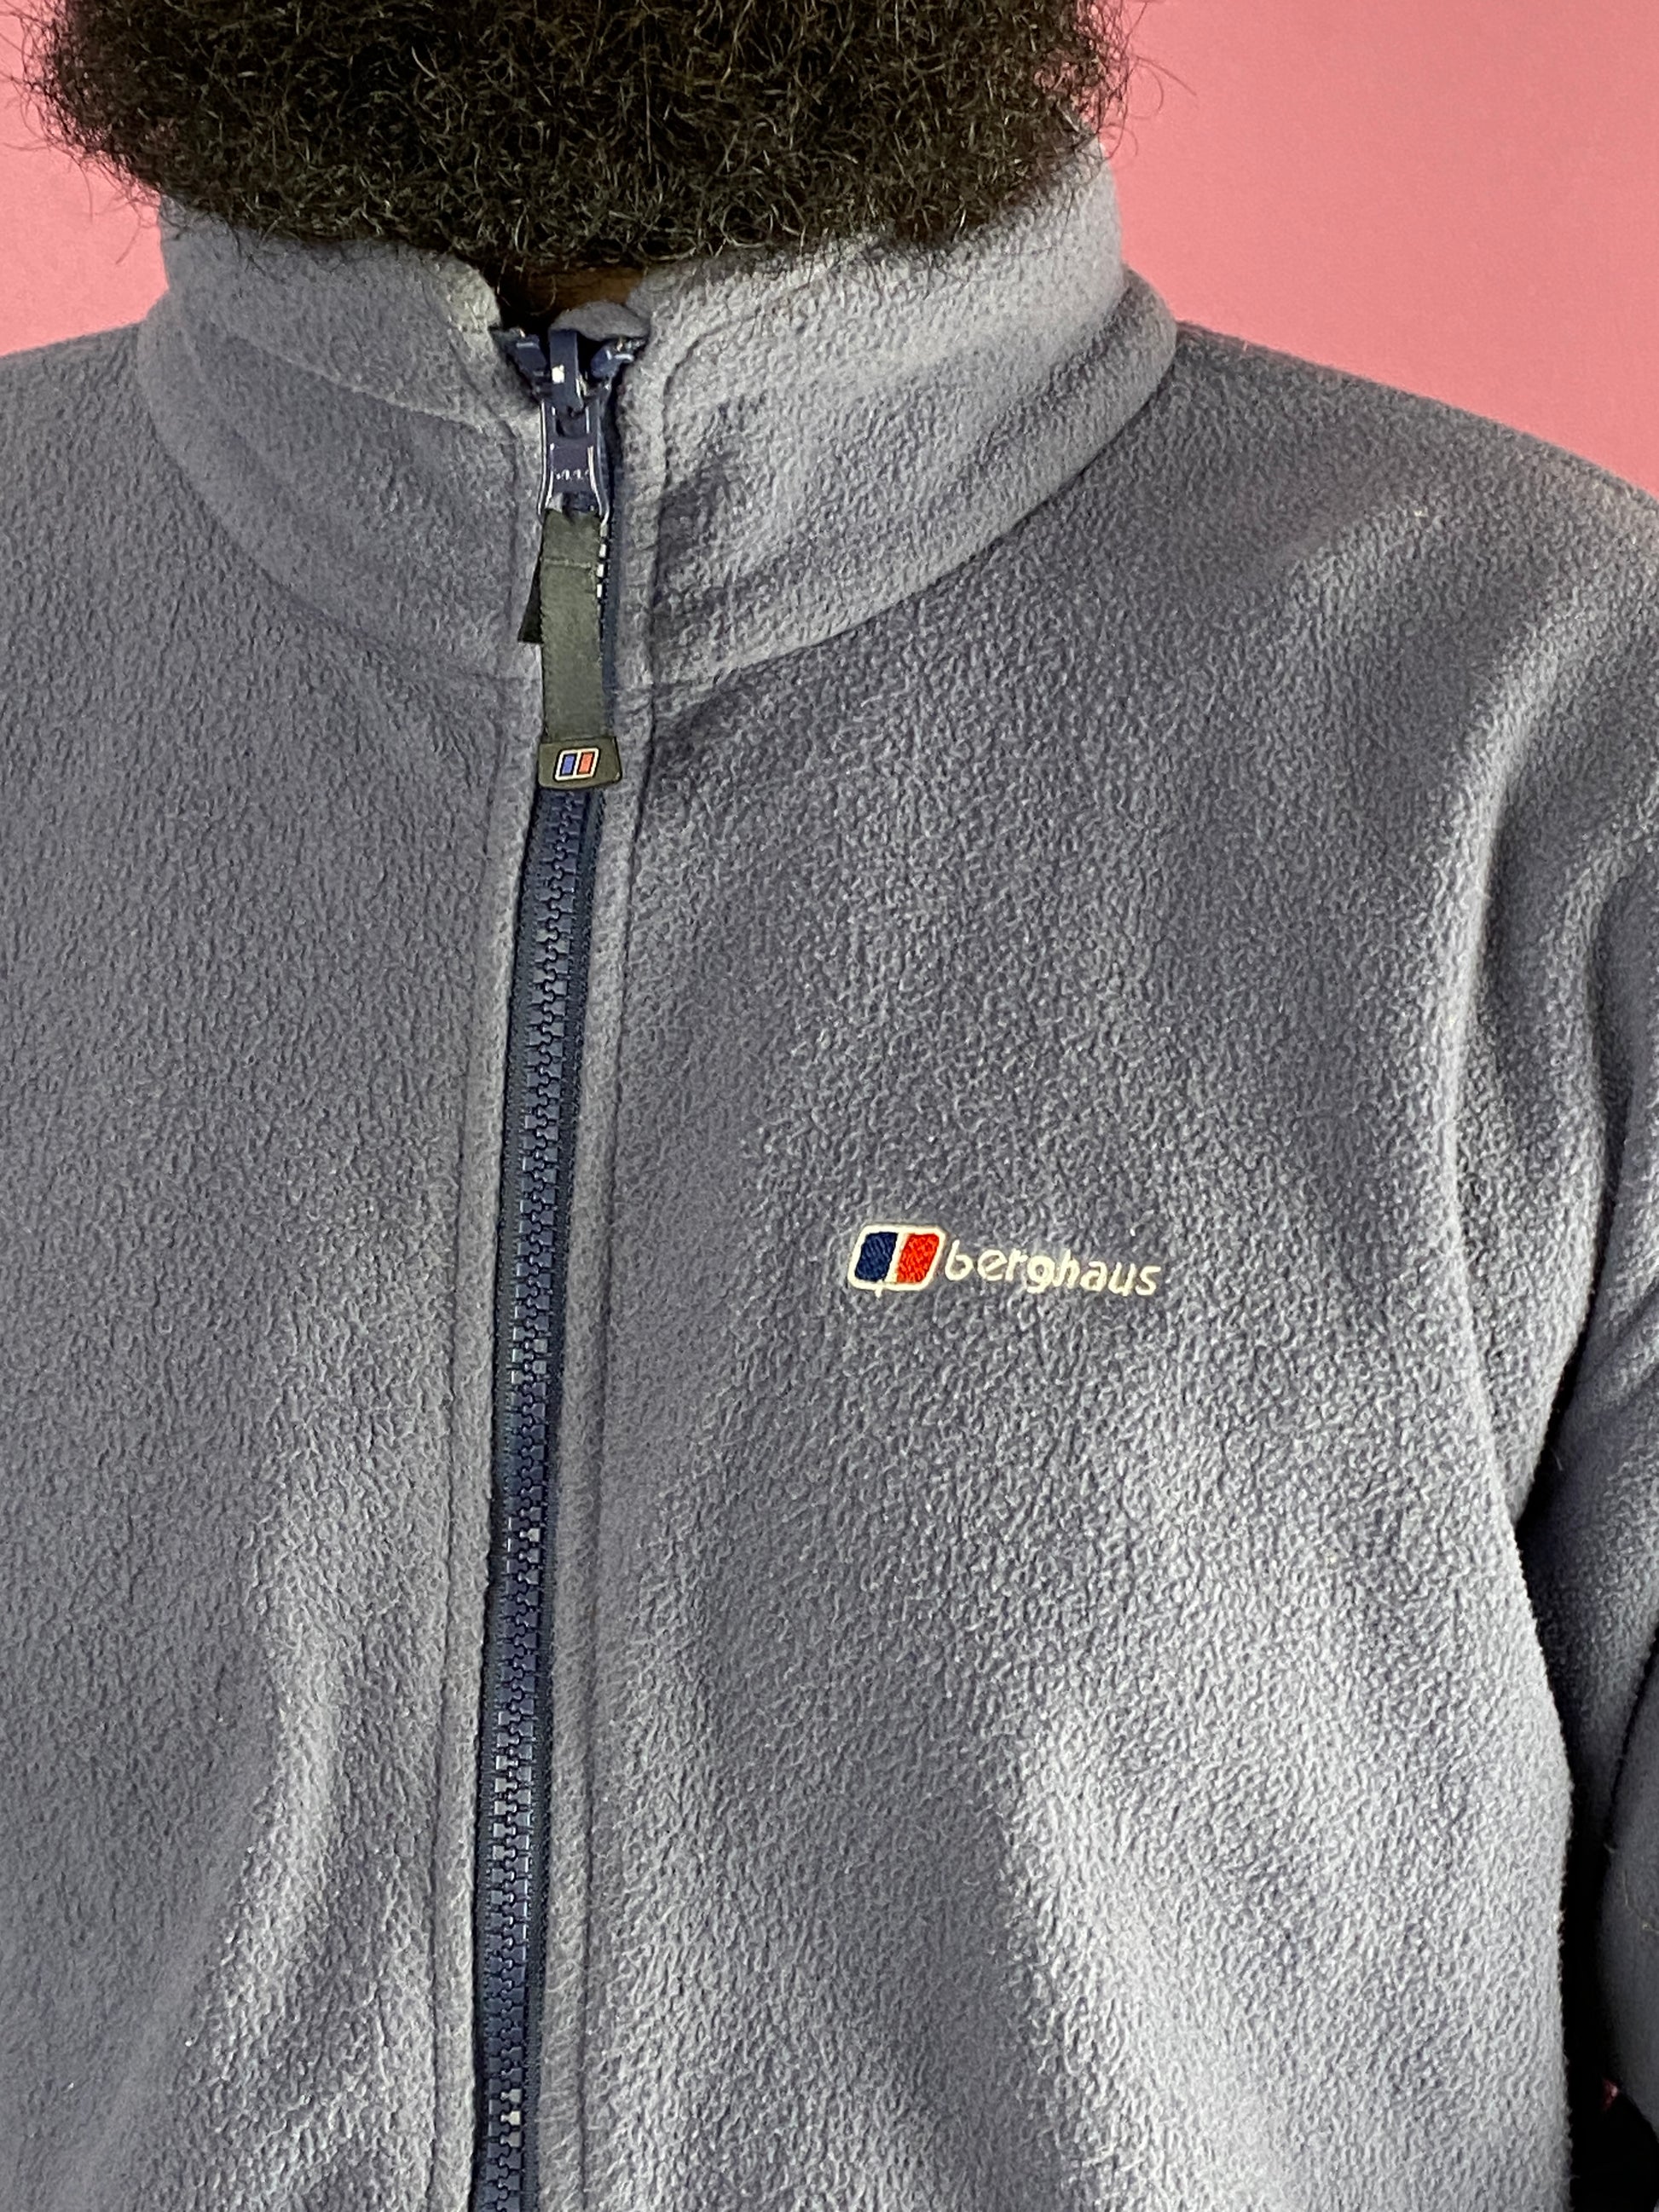 Berghaus Vintage Men's Full Zip Fleece Jacket - L Gray Polyester